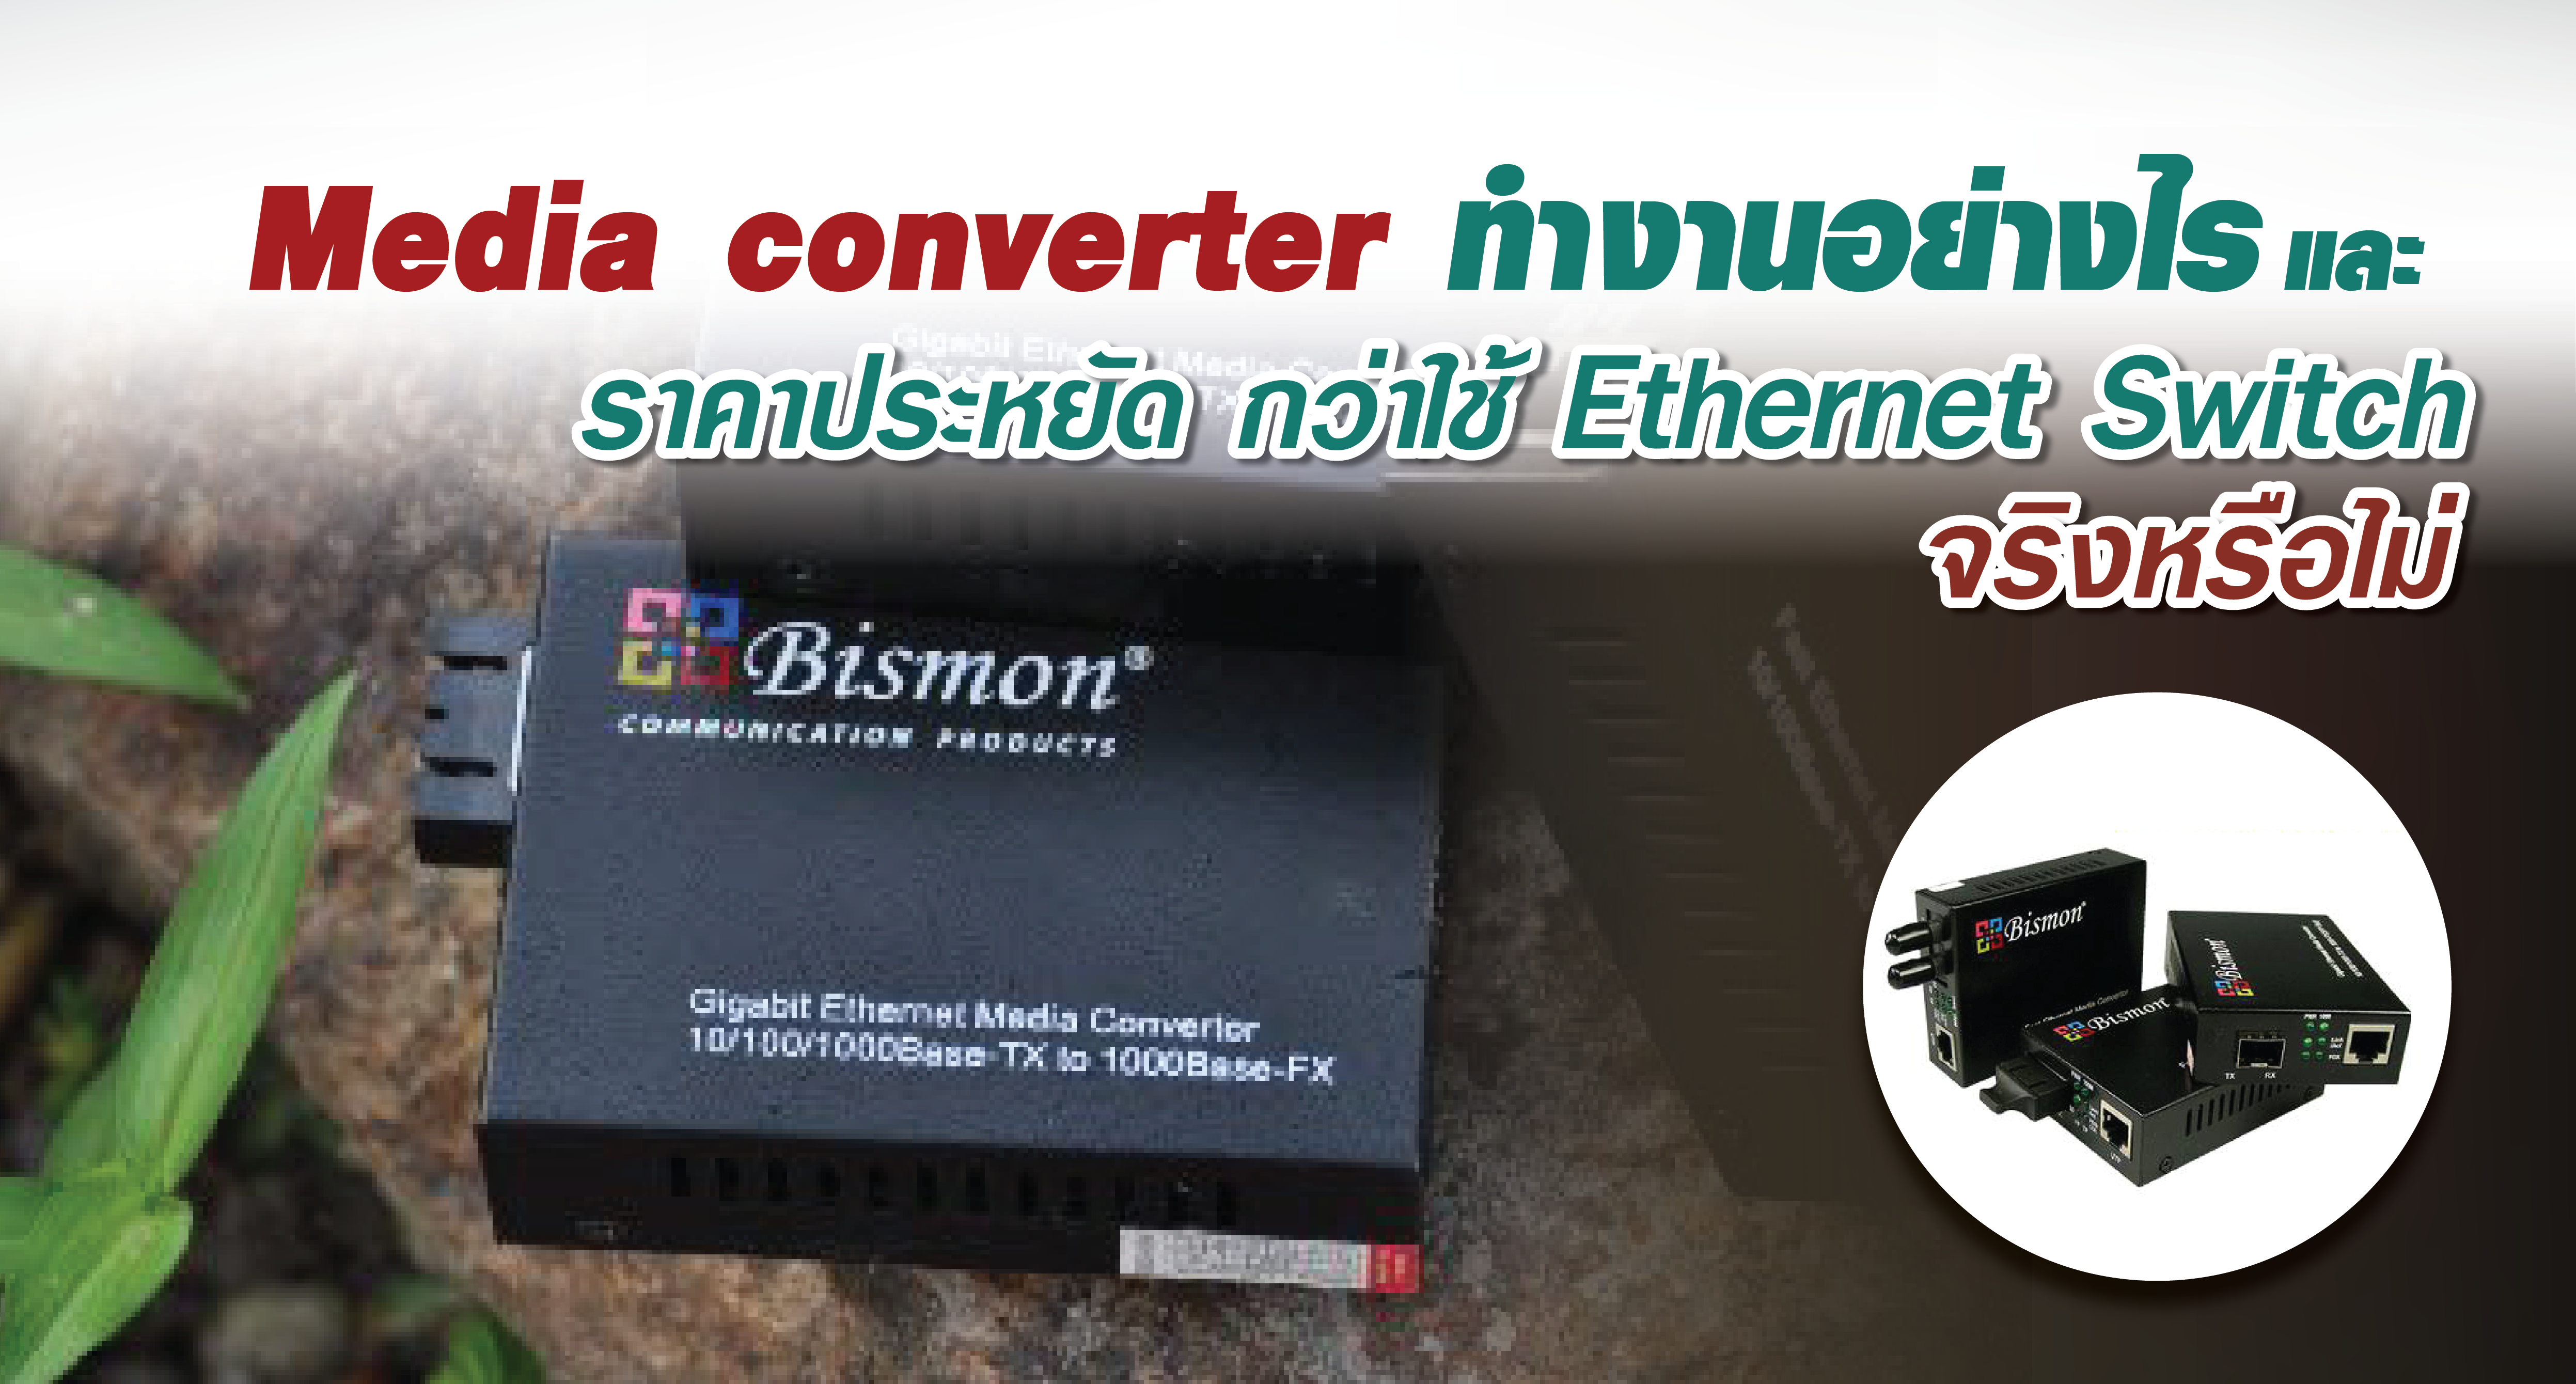 Media converter ทำงานอย่างไร และ ราคาประหยัด กว่าใช้ Ethernet Switch จริงหรือไม่